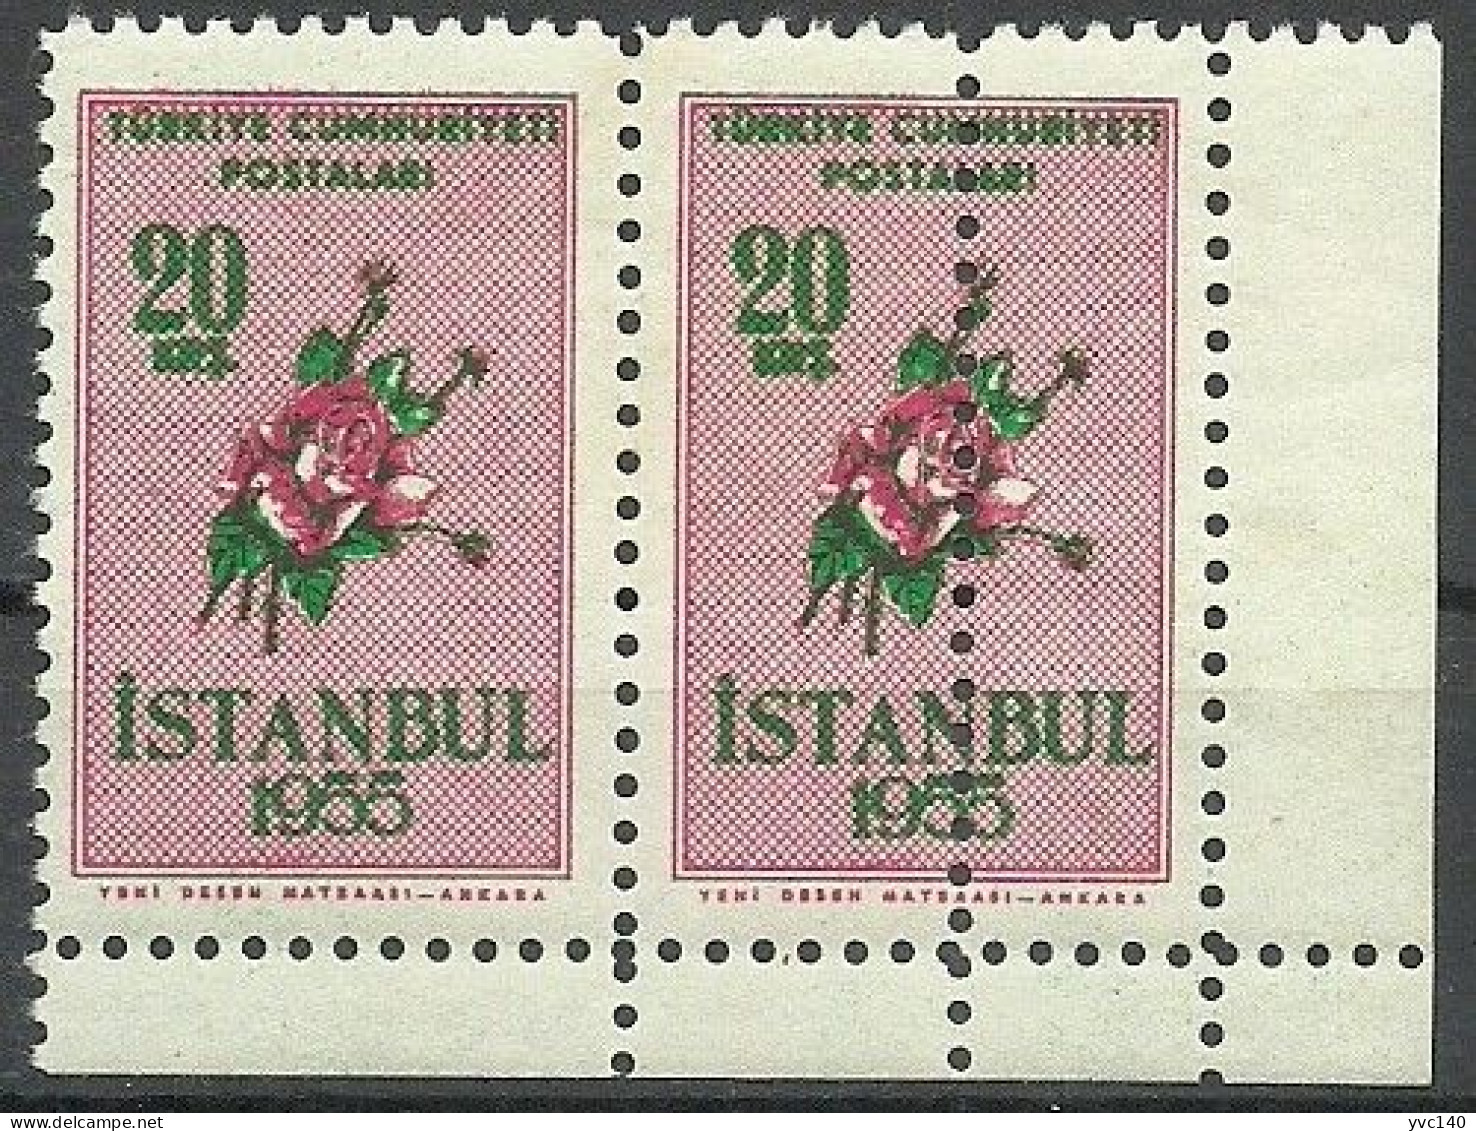 Turkey; 1955 Istanbul Spring And Flower Festivity 20 K. ERROR "Double Perf." - Ungebraucht